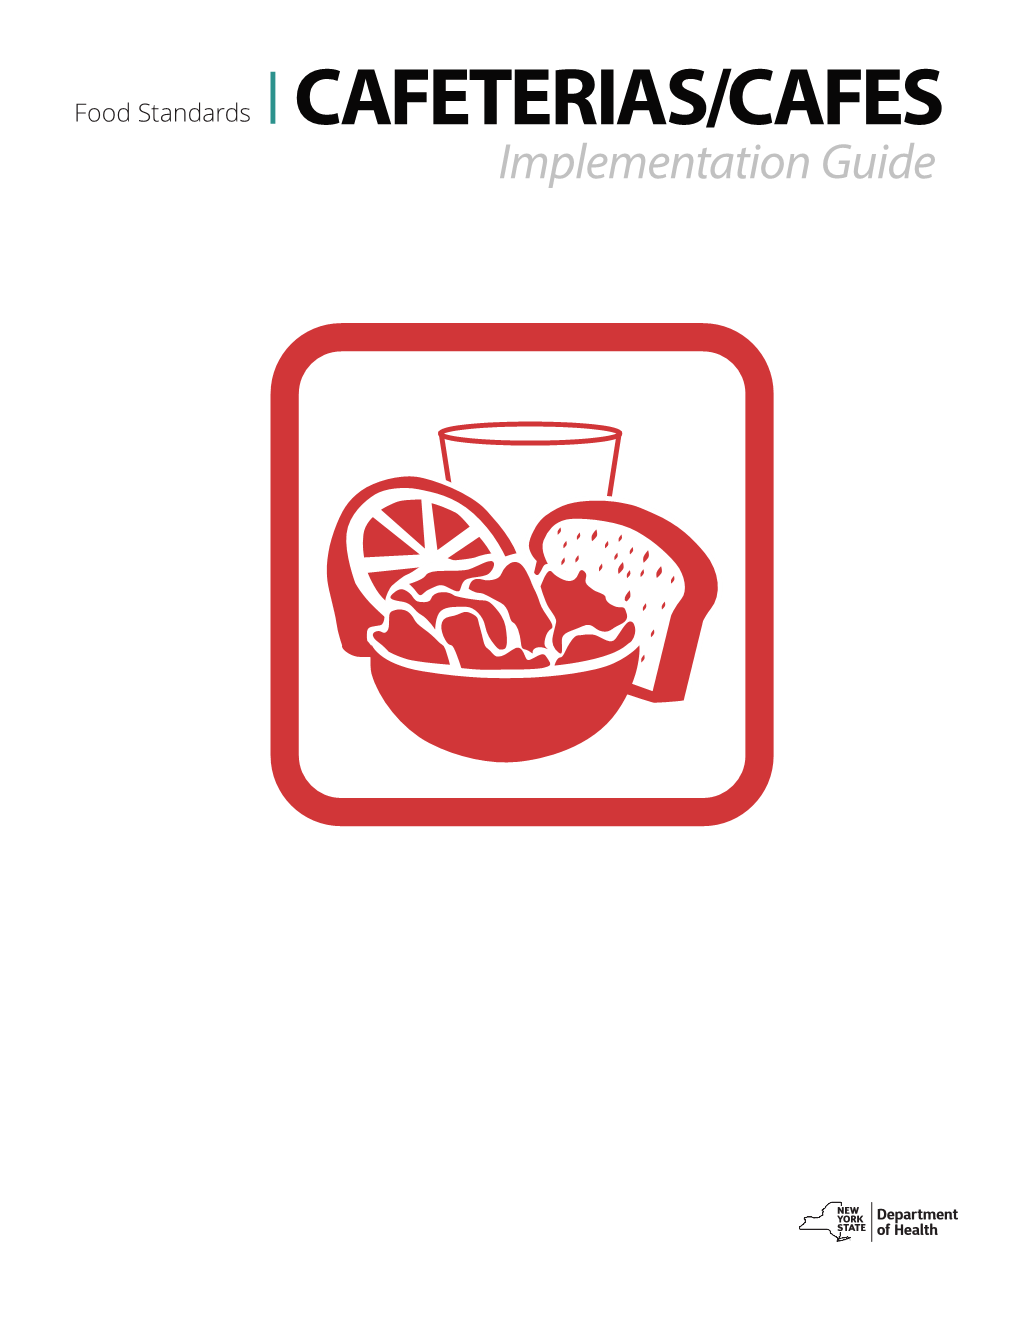 CAFETERIAS/CAFES Implementation Guide